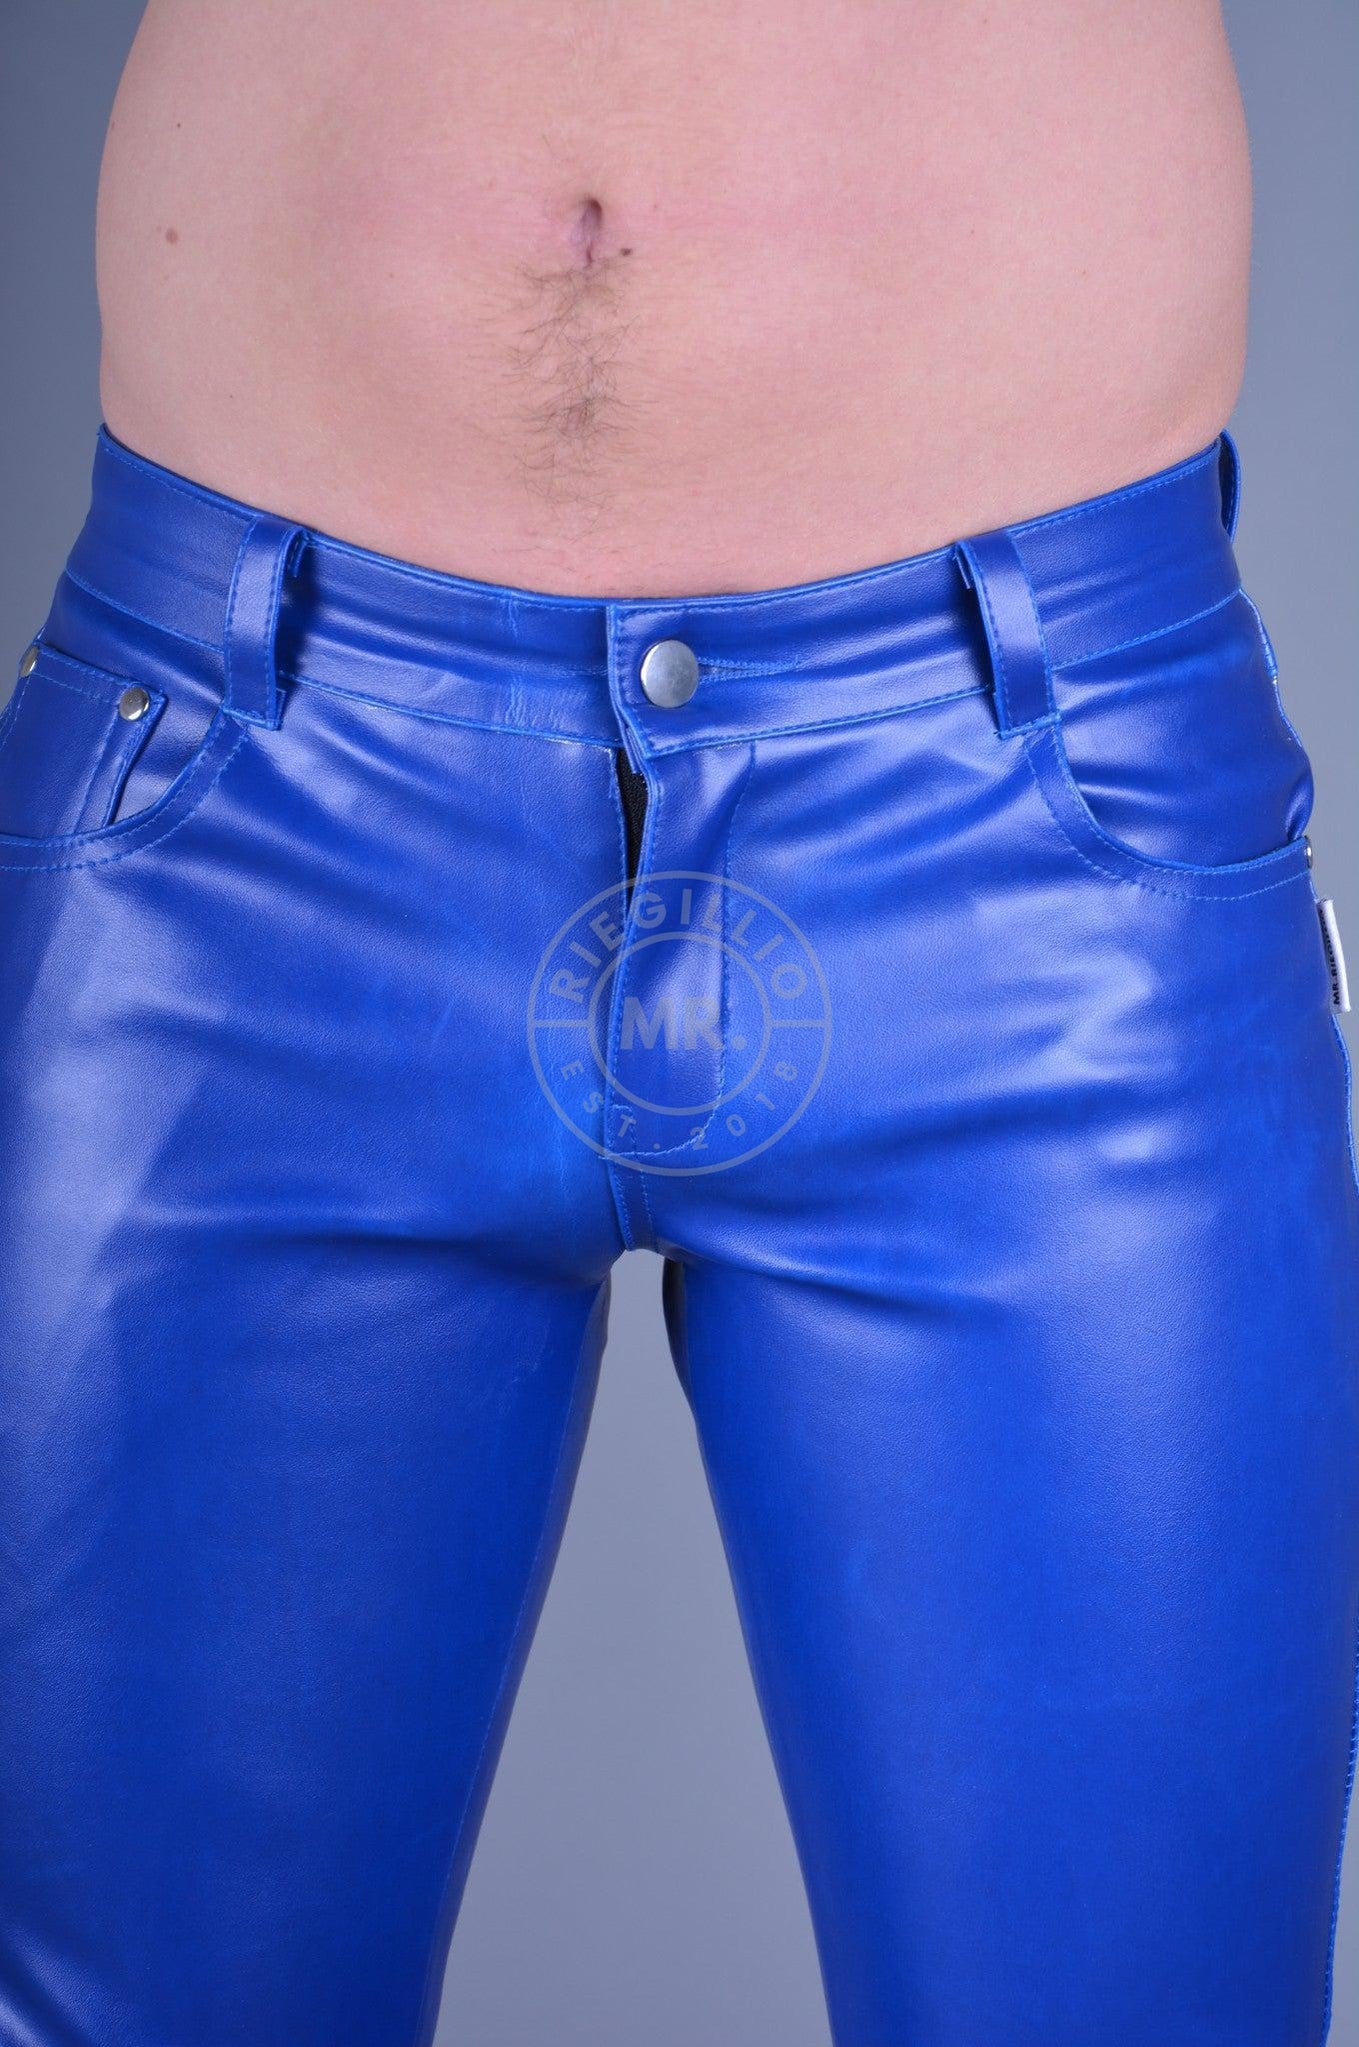 MR. 5-Pocket Pants Blue at MR. Riegillio